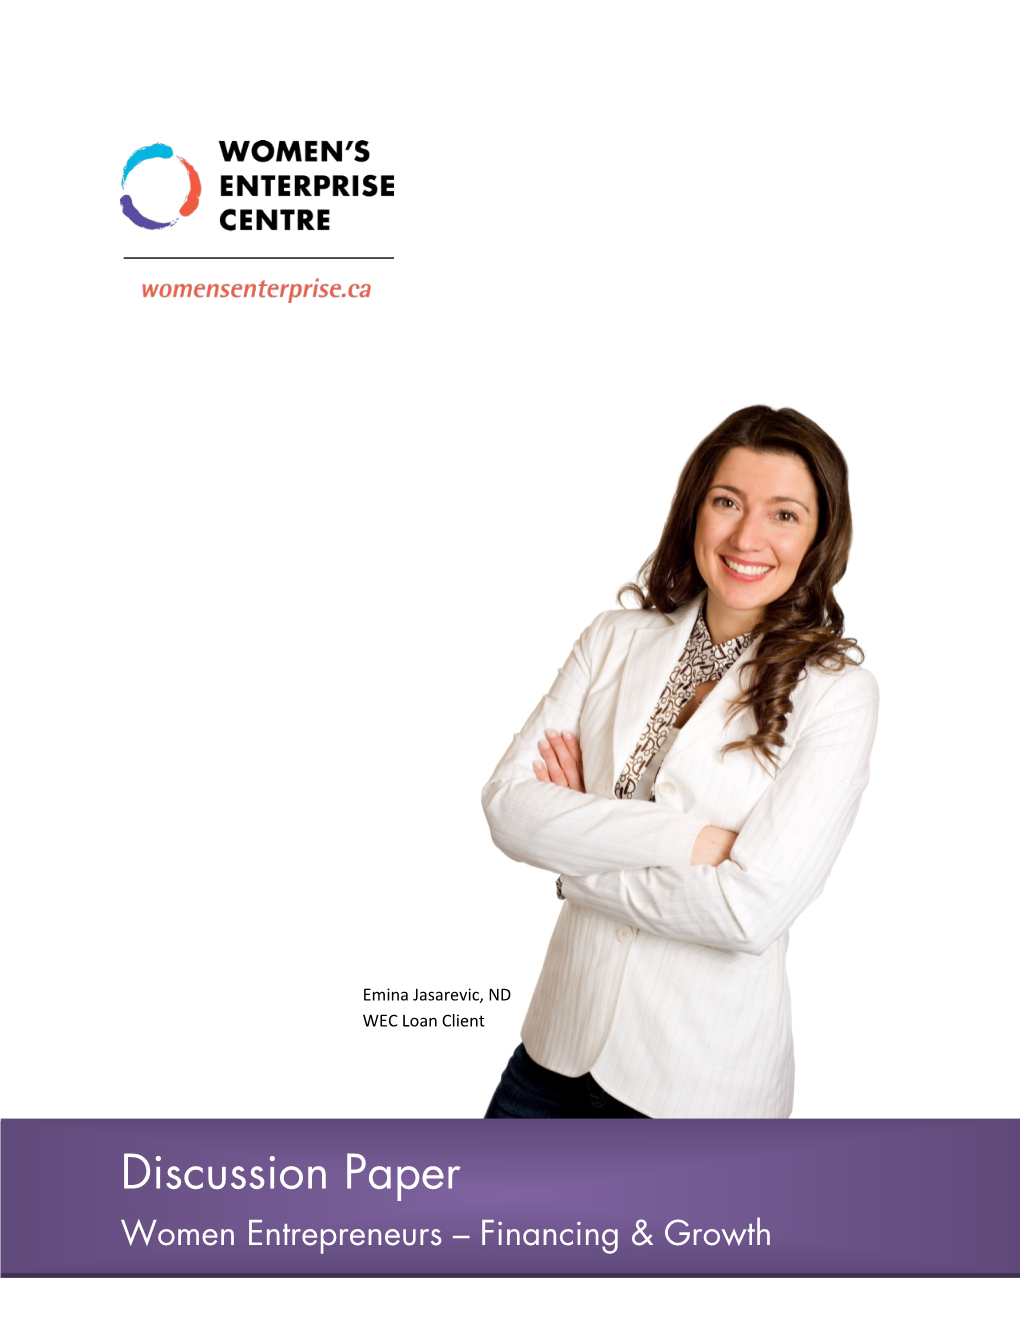 View the Discussion Paper: Women Entrepreneurs